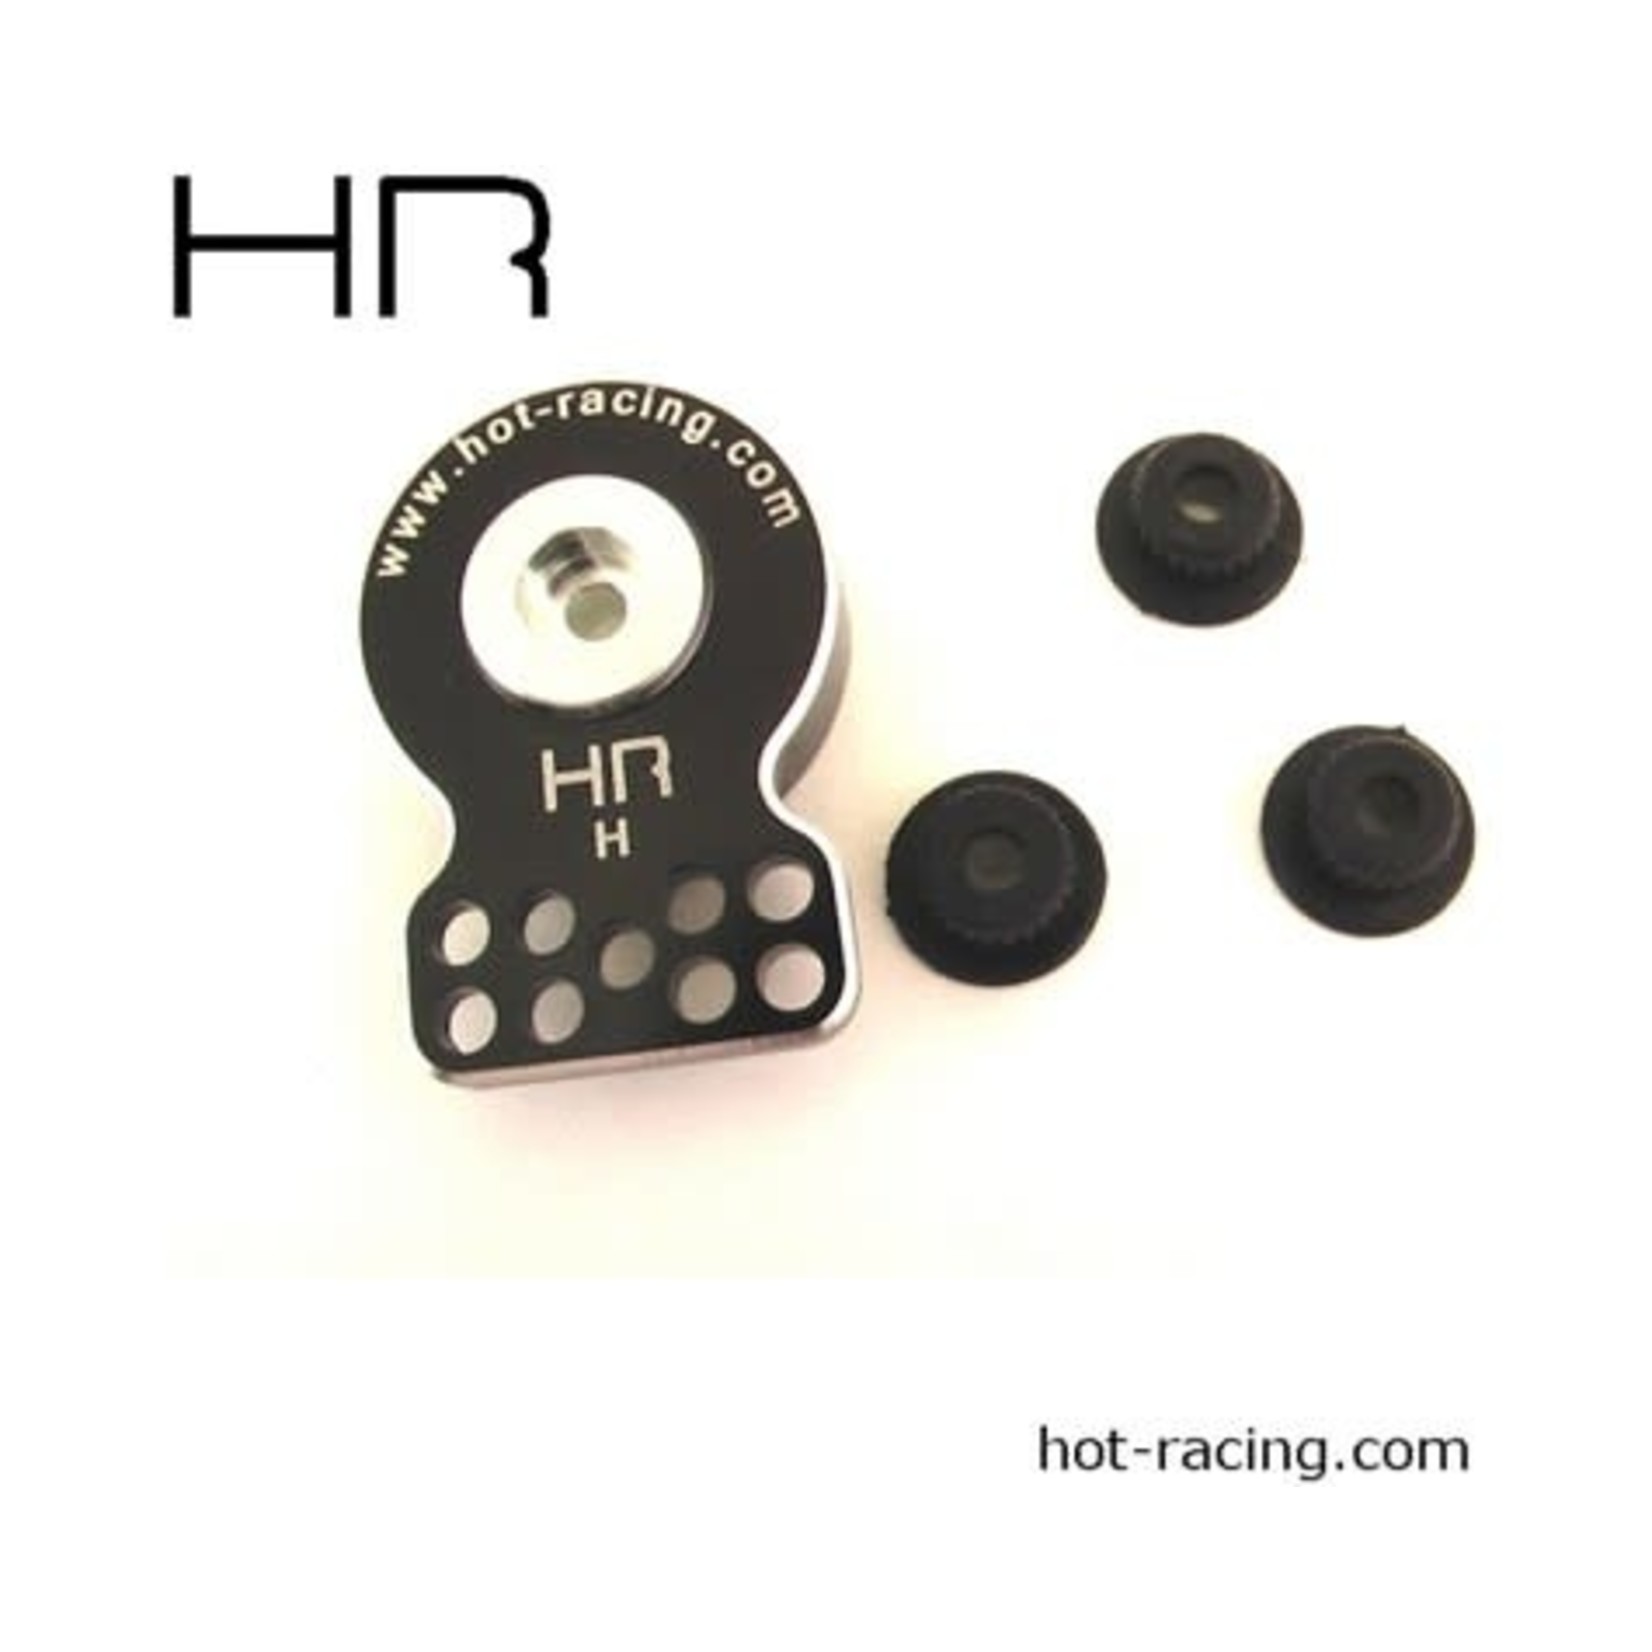 Hot Racing Hot Racing Aluminum CNC Heavy Duty Servo Saver w/Heavy Spring Tension (Black) #SHS88H